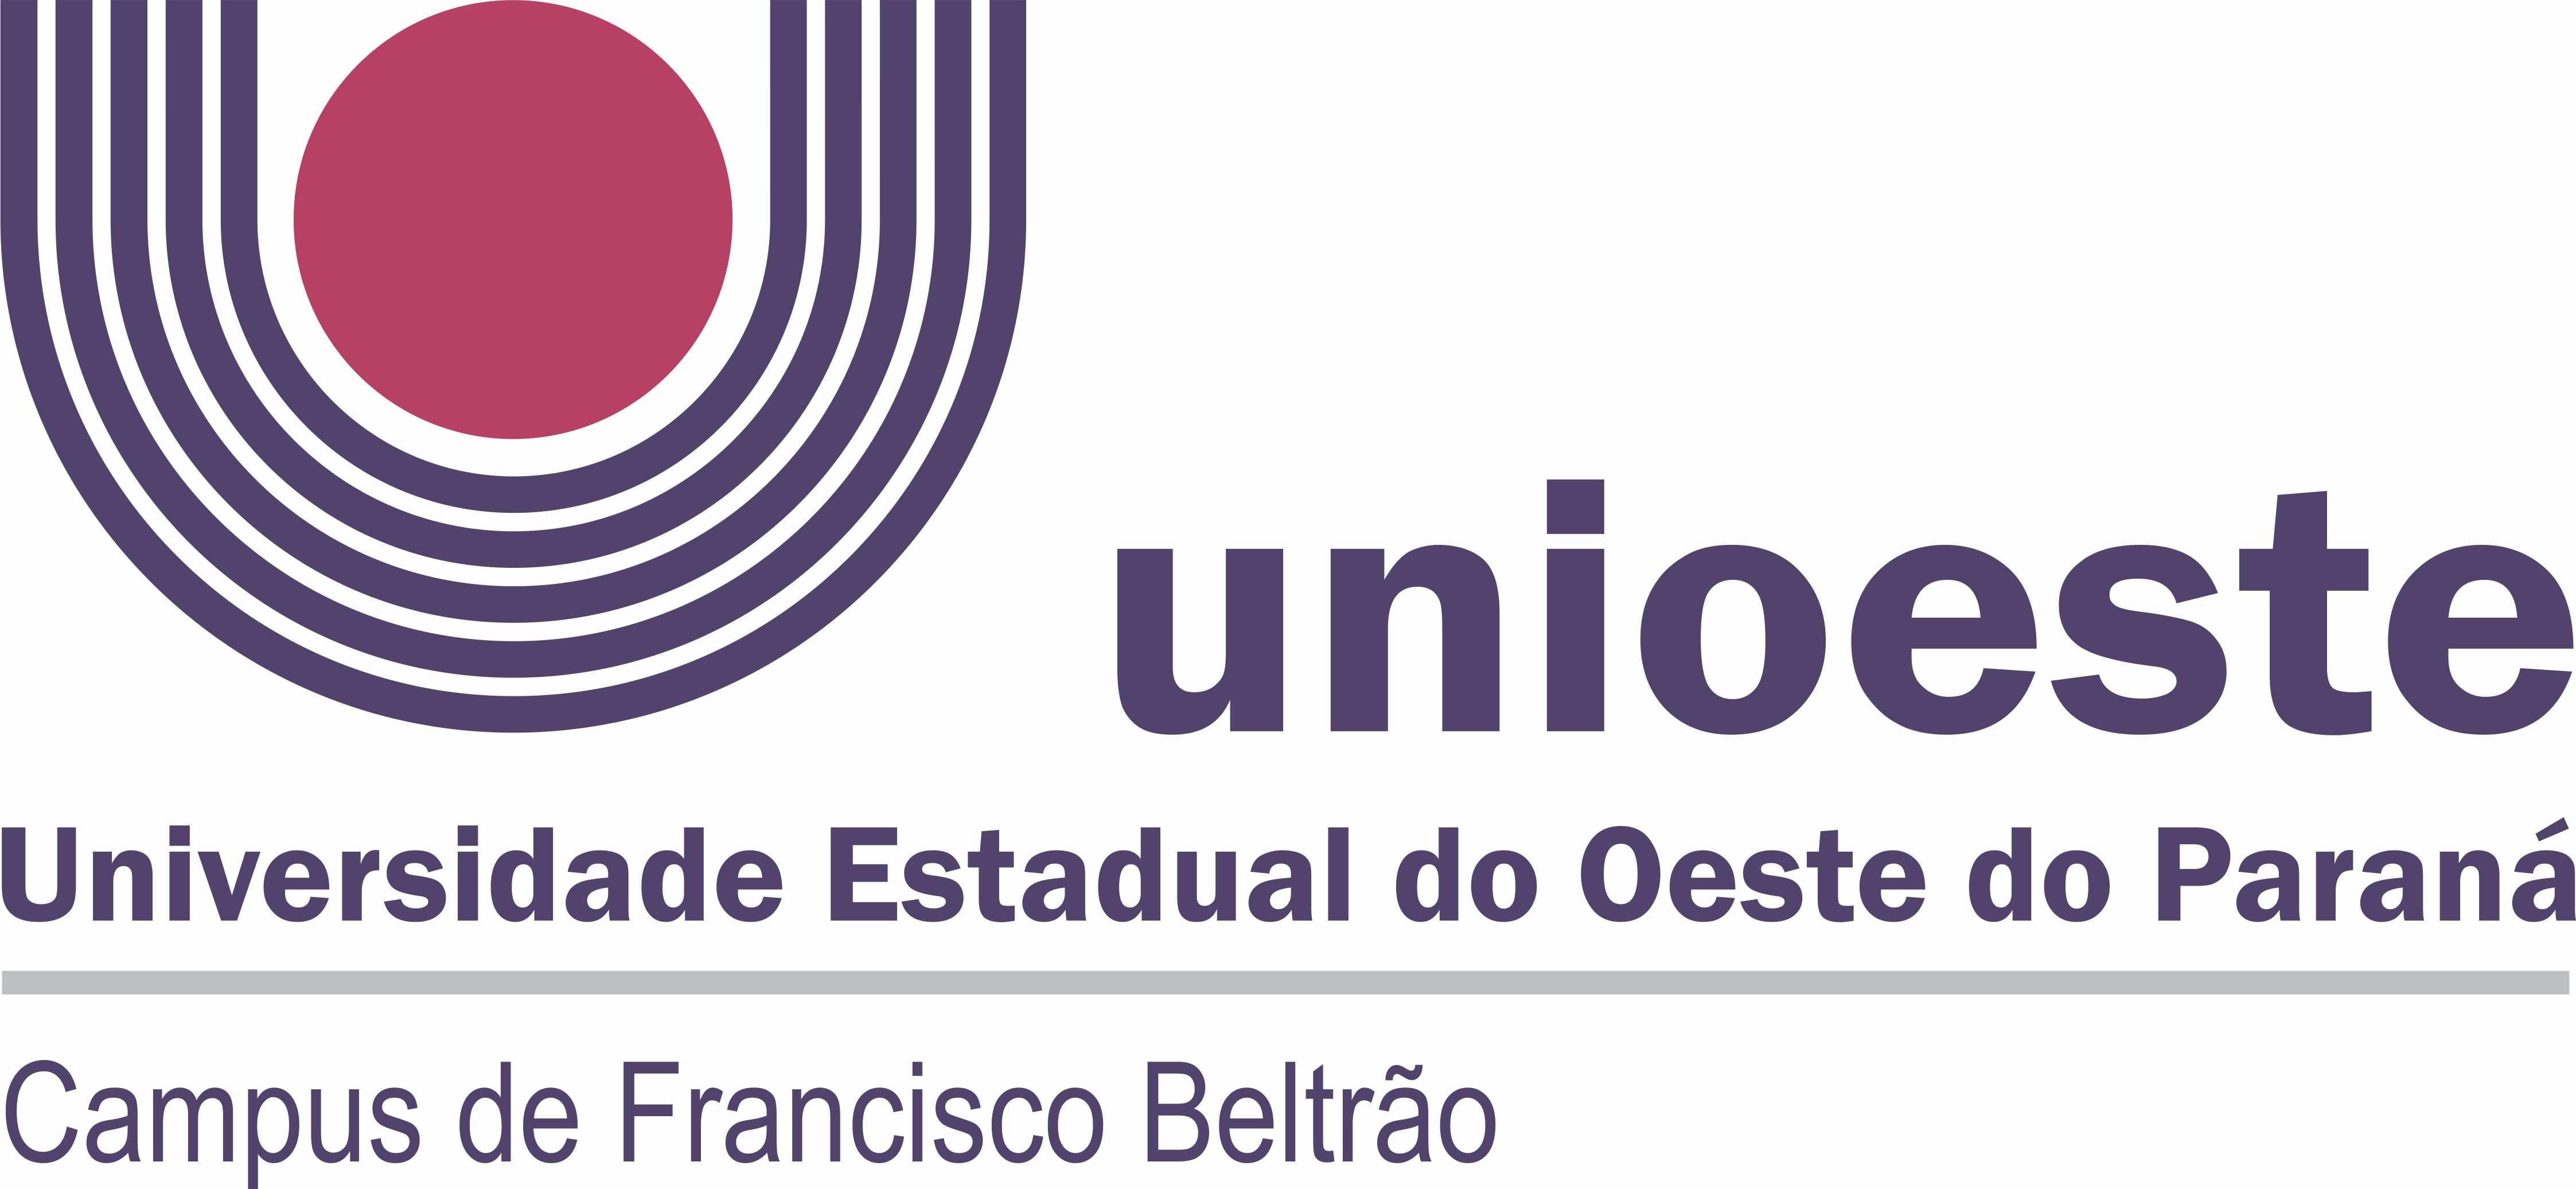 Logotipo Unioeste CAMPUS BELTRÃO